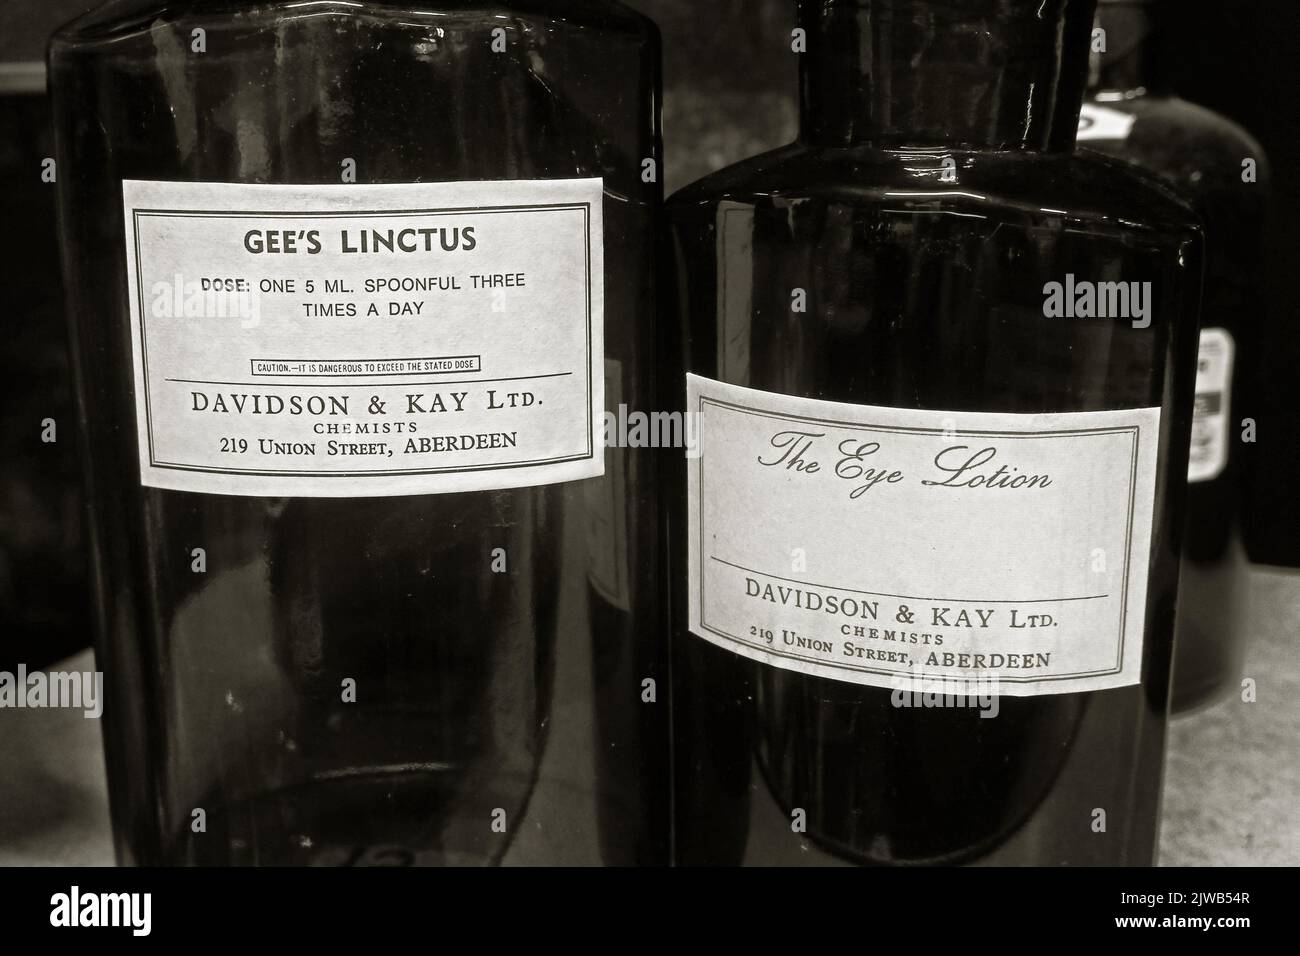 Gee's Linctus & The Eye Lotion - prepared by Davidson & Kay, Chemists of 219 Union Street, Aberdeen, Aberdeenshire, Scotland, UK, AB10 1TL Stock Photo